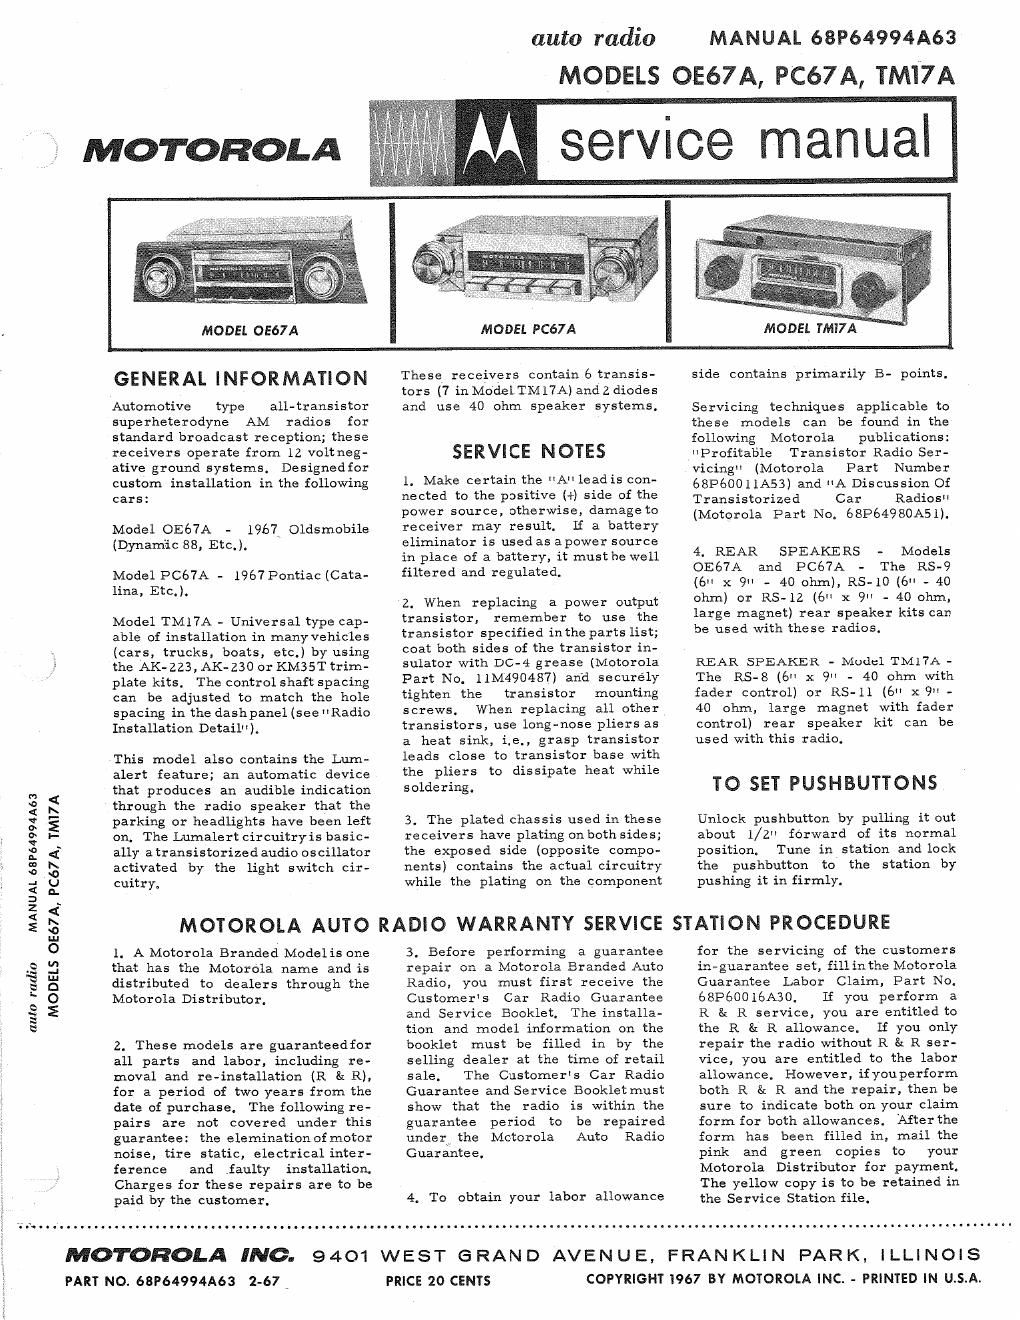 motorola pc 67 a service manual